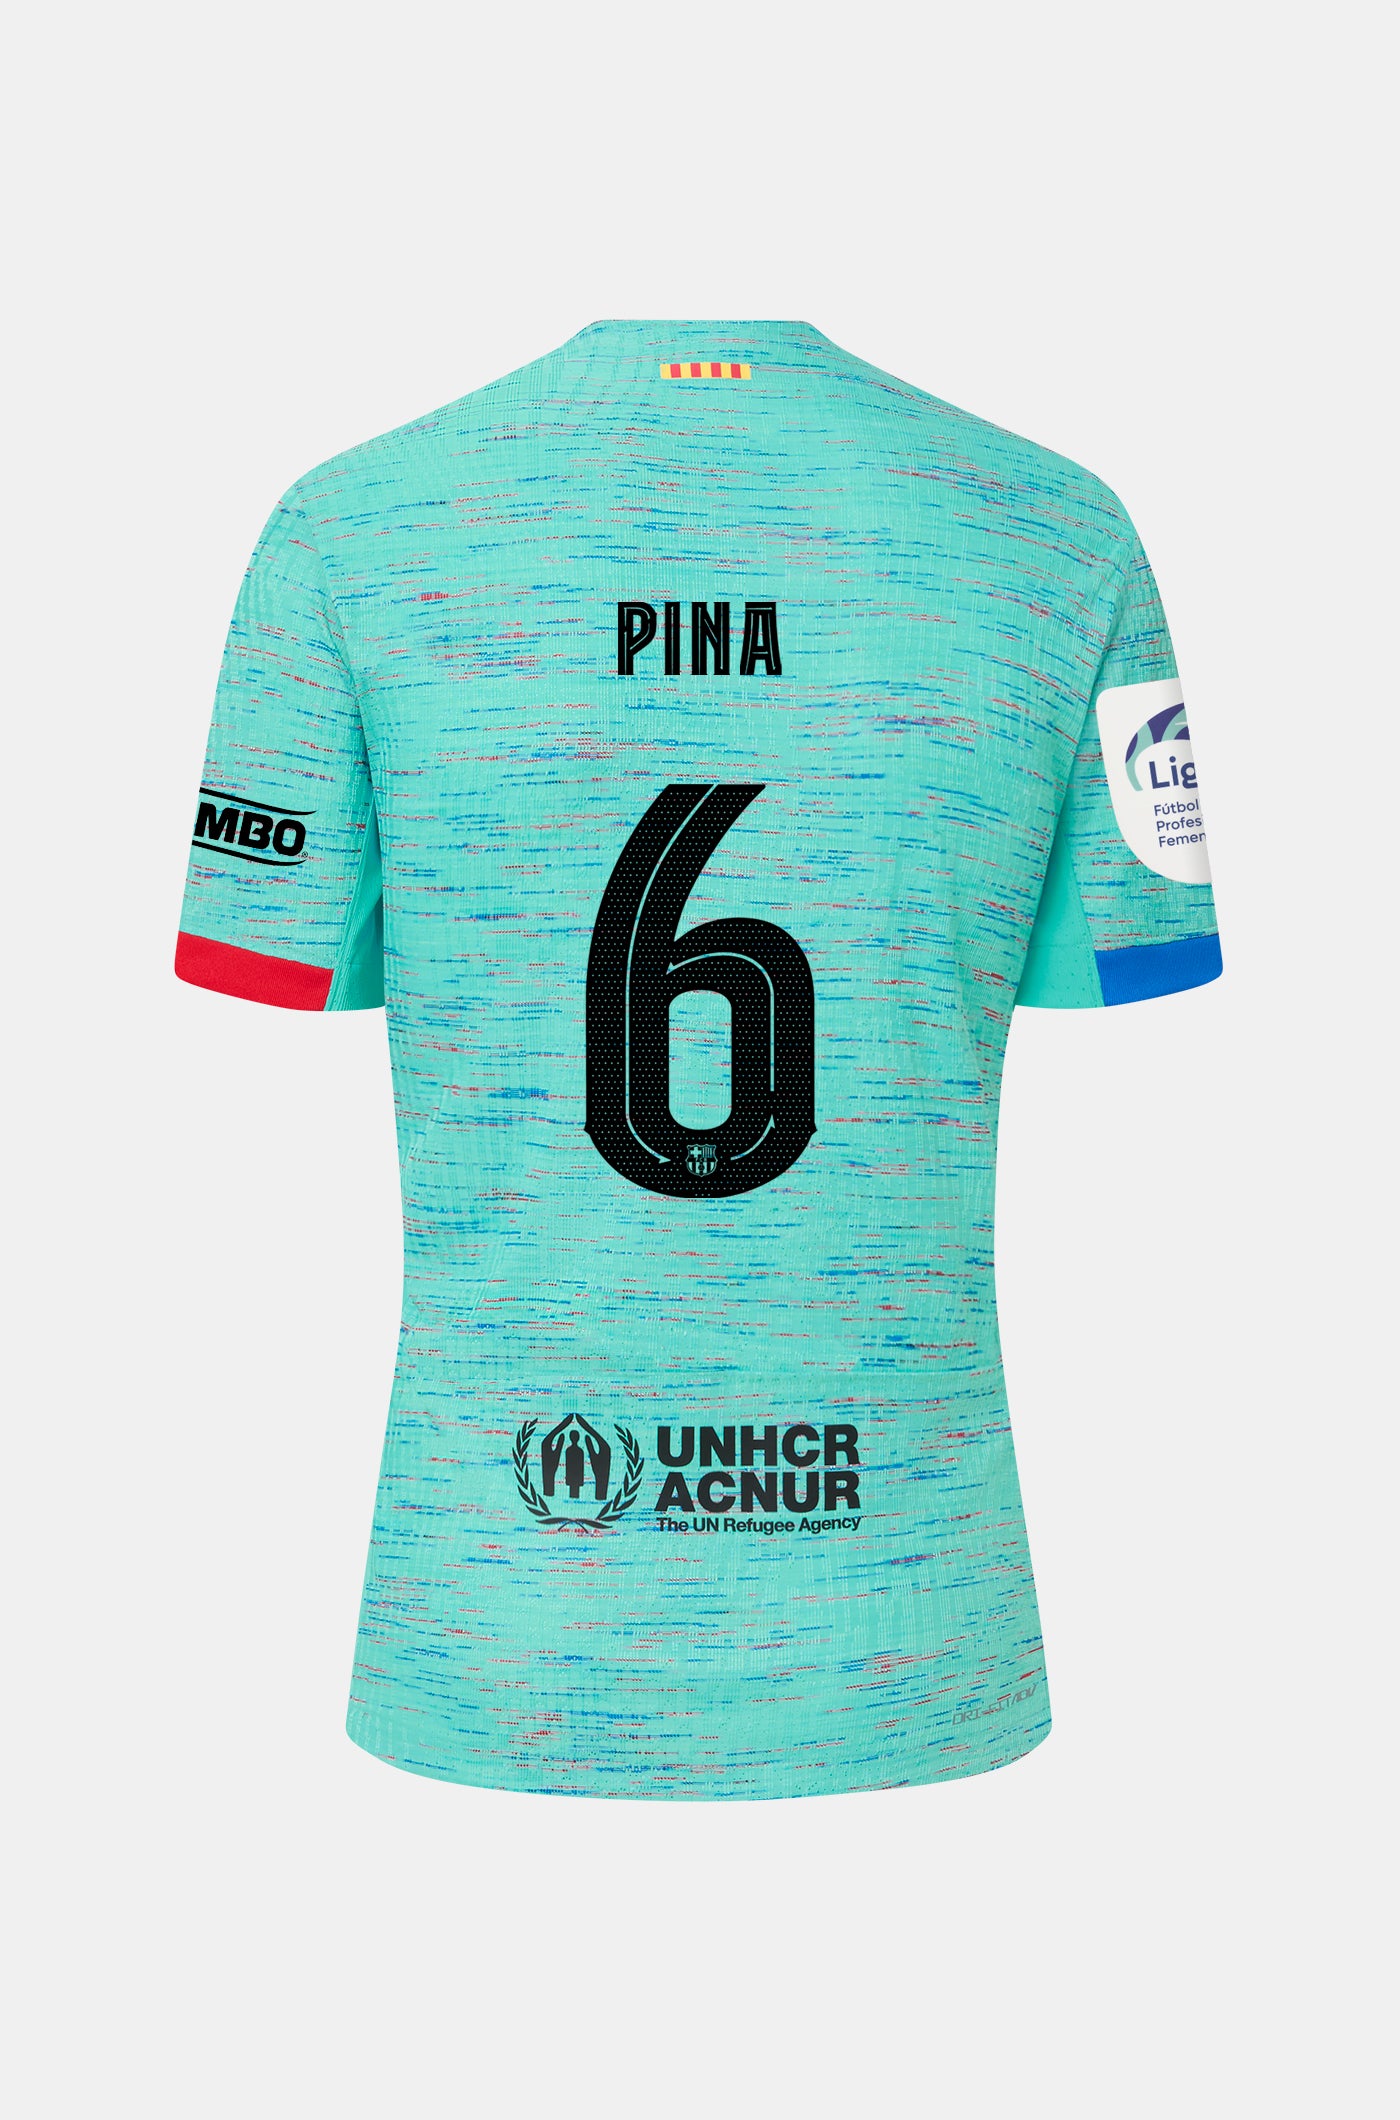 Liga F FC Barcelona third shirt 23/24 - Women  - PINA